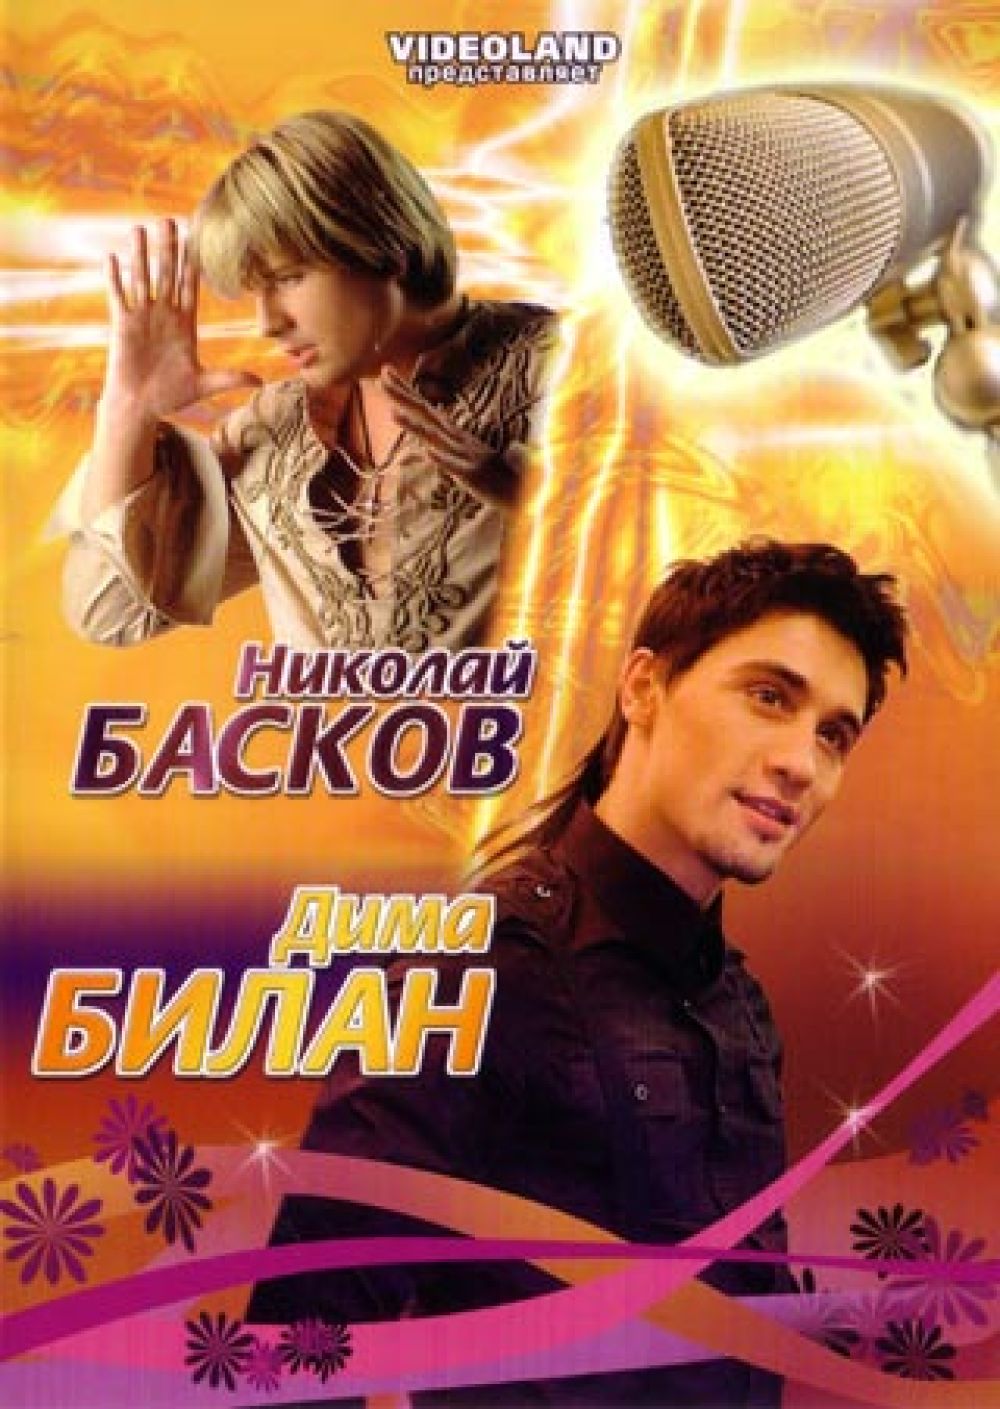  DVD Николай Басков и Дима Билан - Николай Басков, Дима Билан